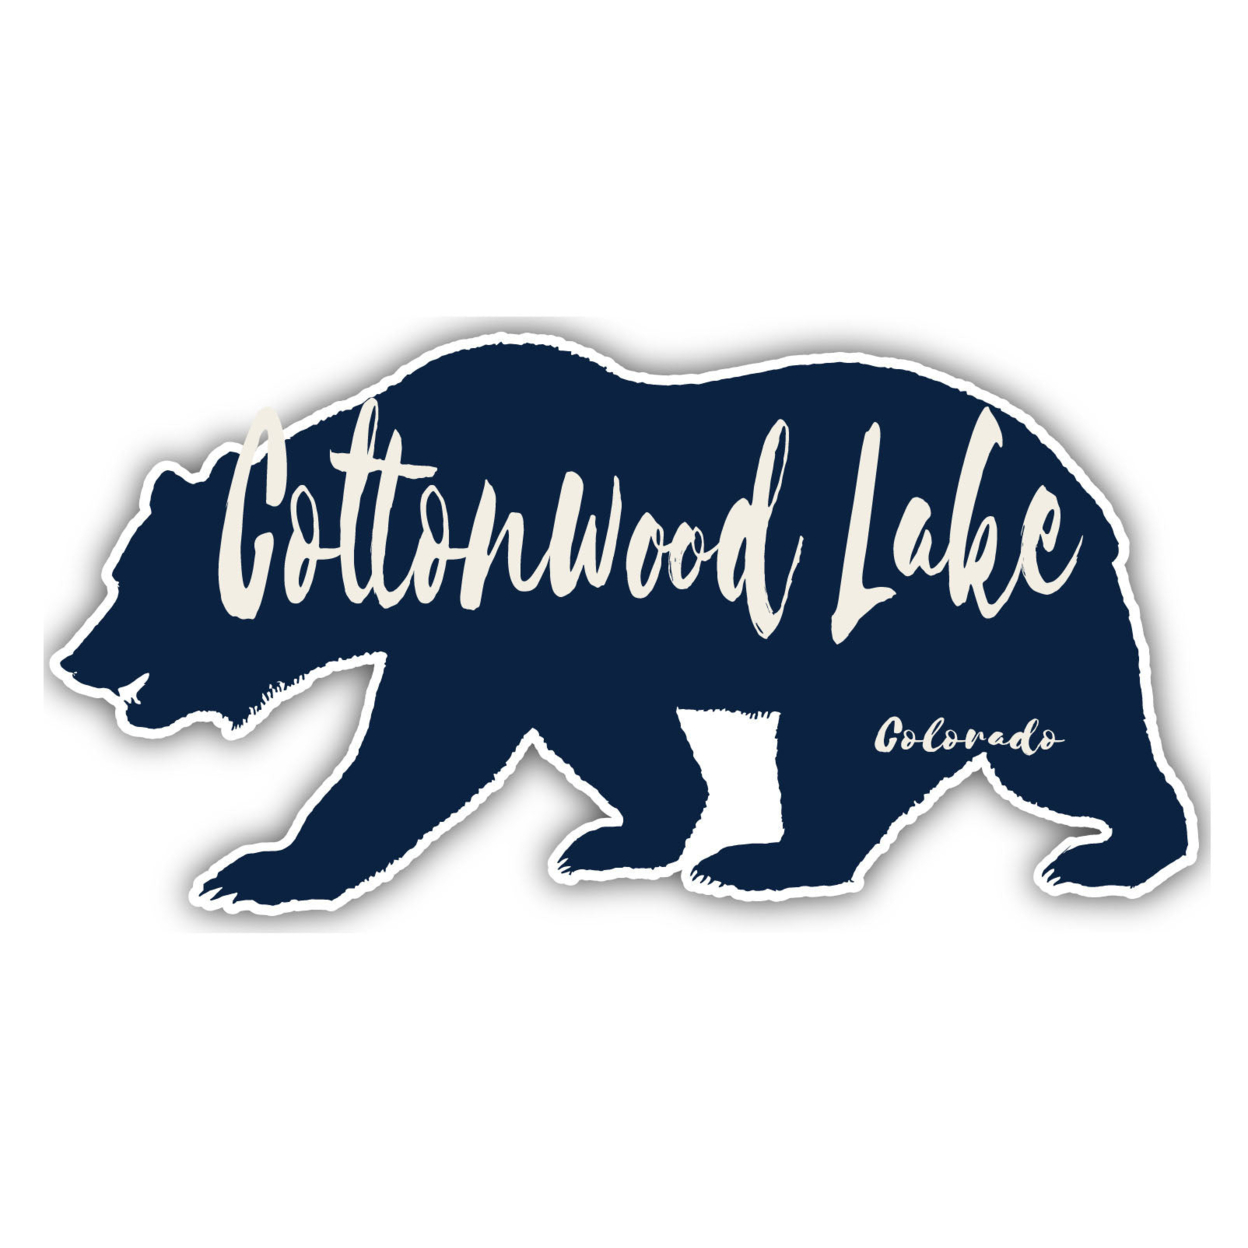 Cottonwood Lake Colorado Souvenir Decorative Stickers (Choose Theme And Size) - Single Unit, 10-Inch, Tent